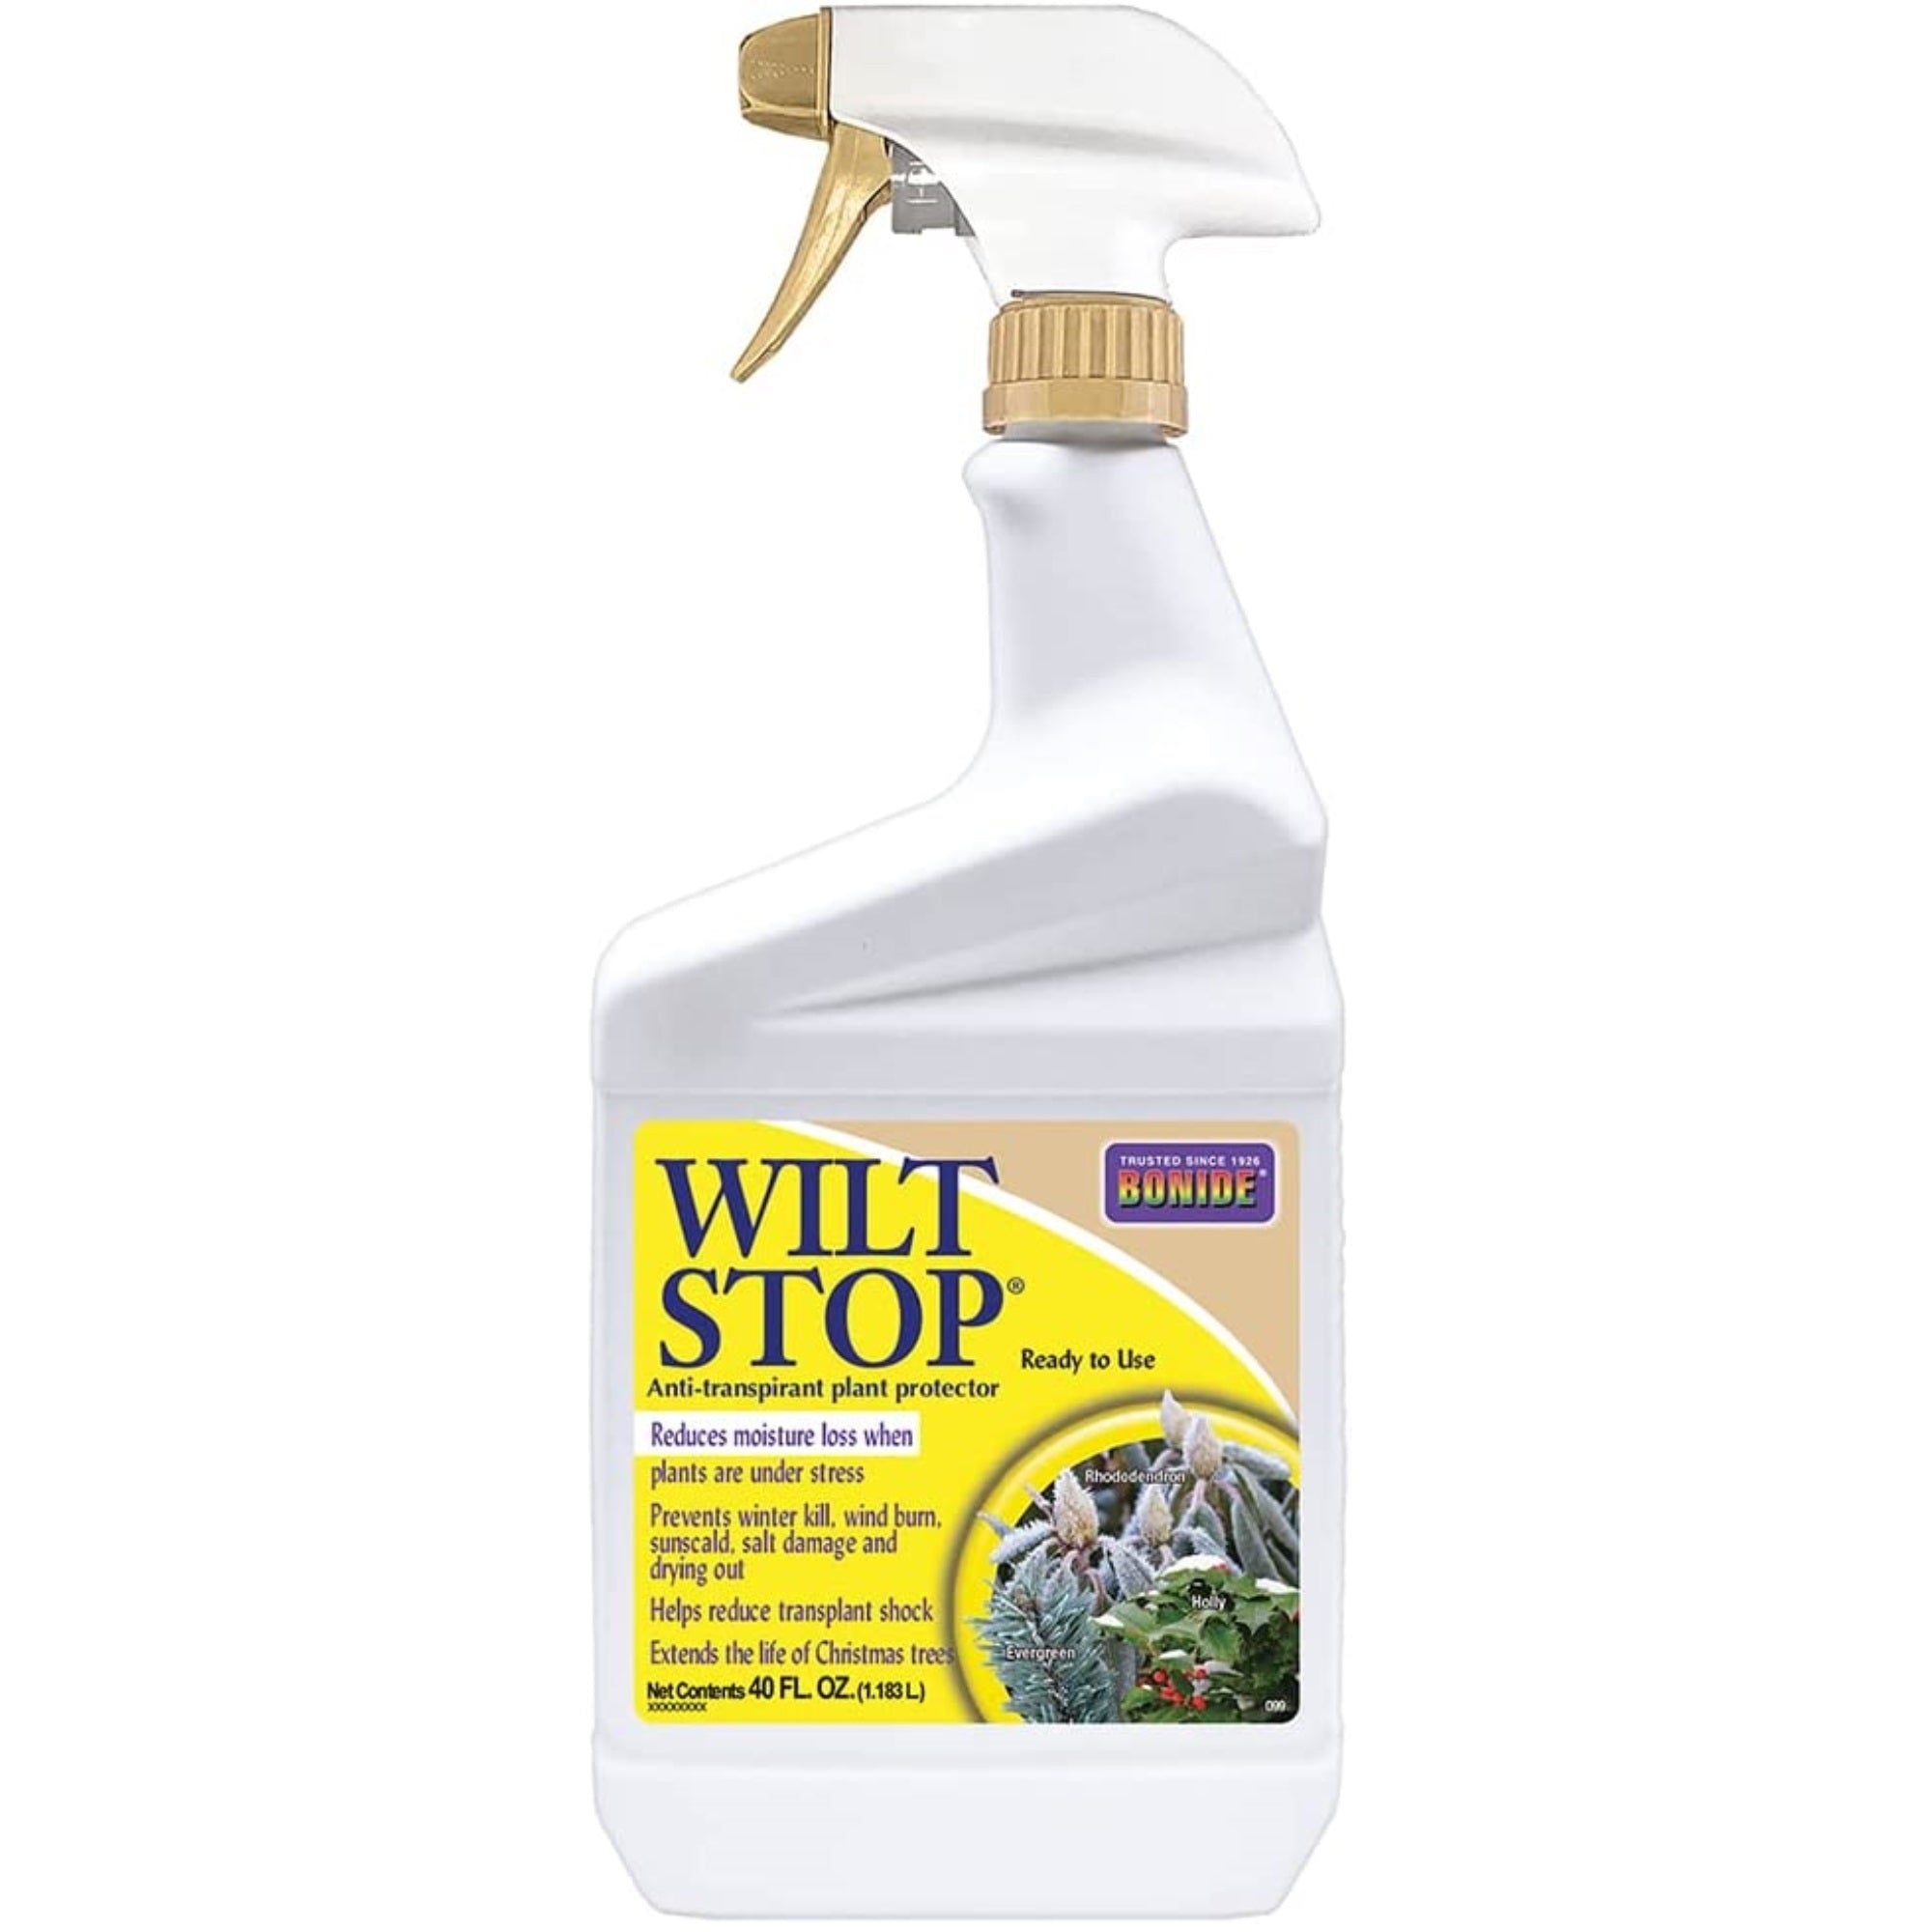 Bonide Ready to Use Wilt Stop Plant Protector Spray, 40 oz